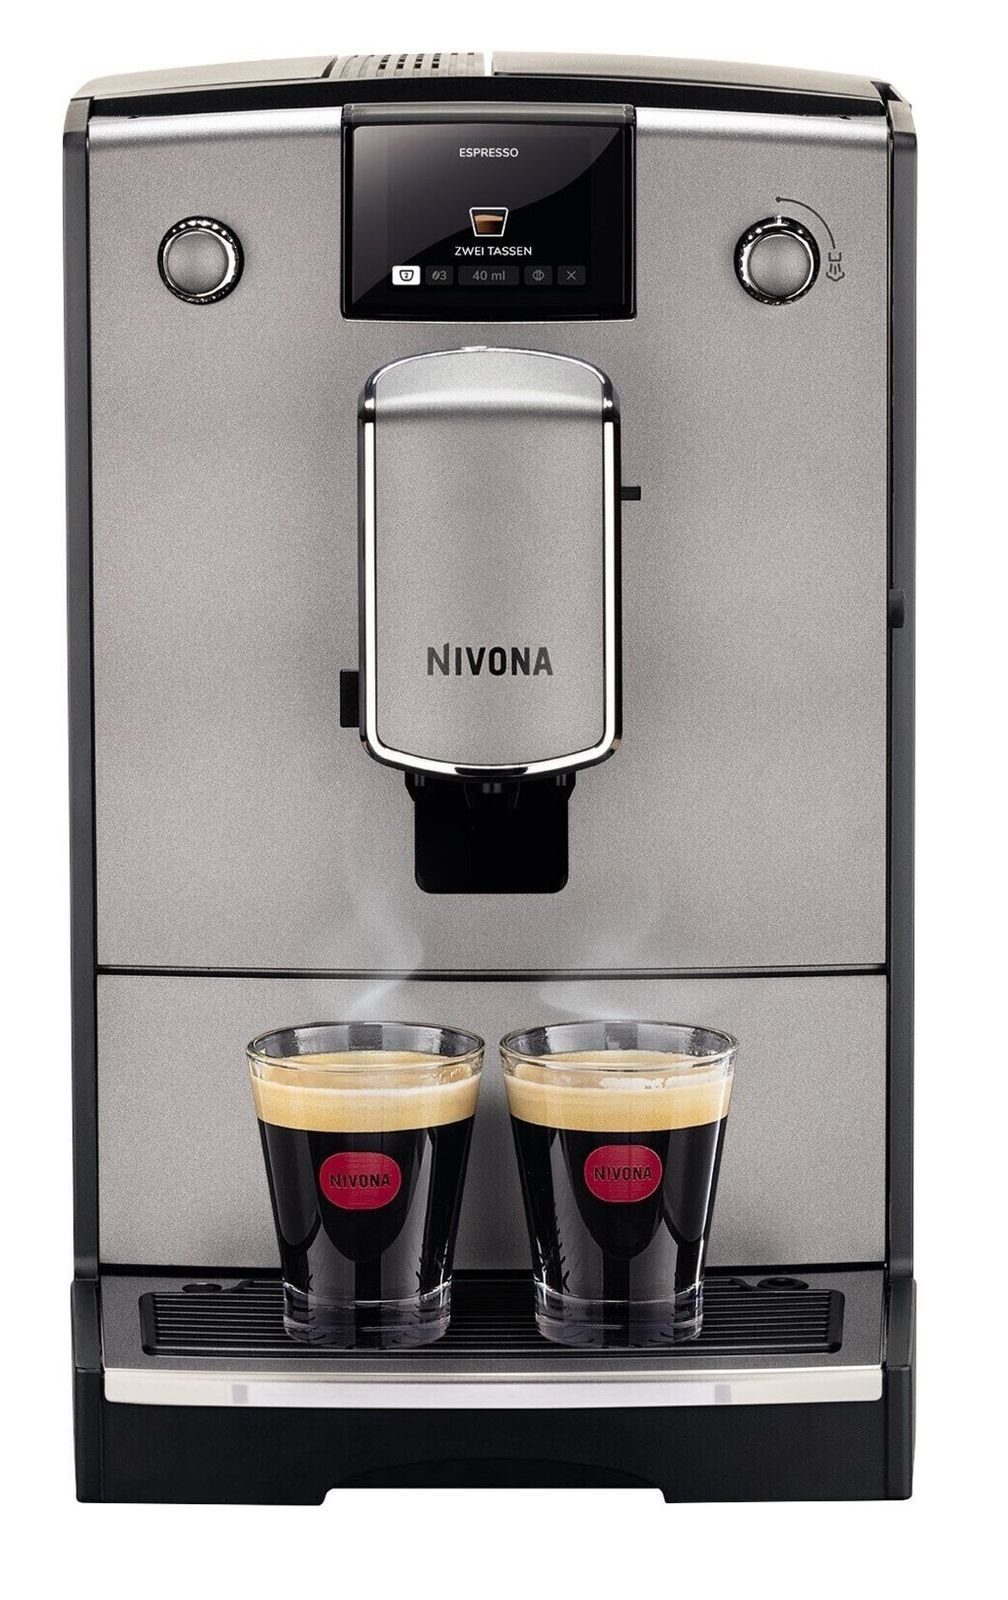 Nivona Kaffeevollautomat CafeRomatica NICR 695 Kaffeevollautomat Kegelmahlwerk Farbdisplay 2,2 L